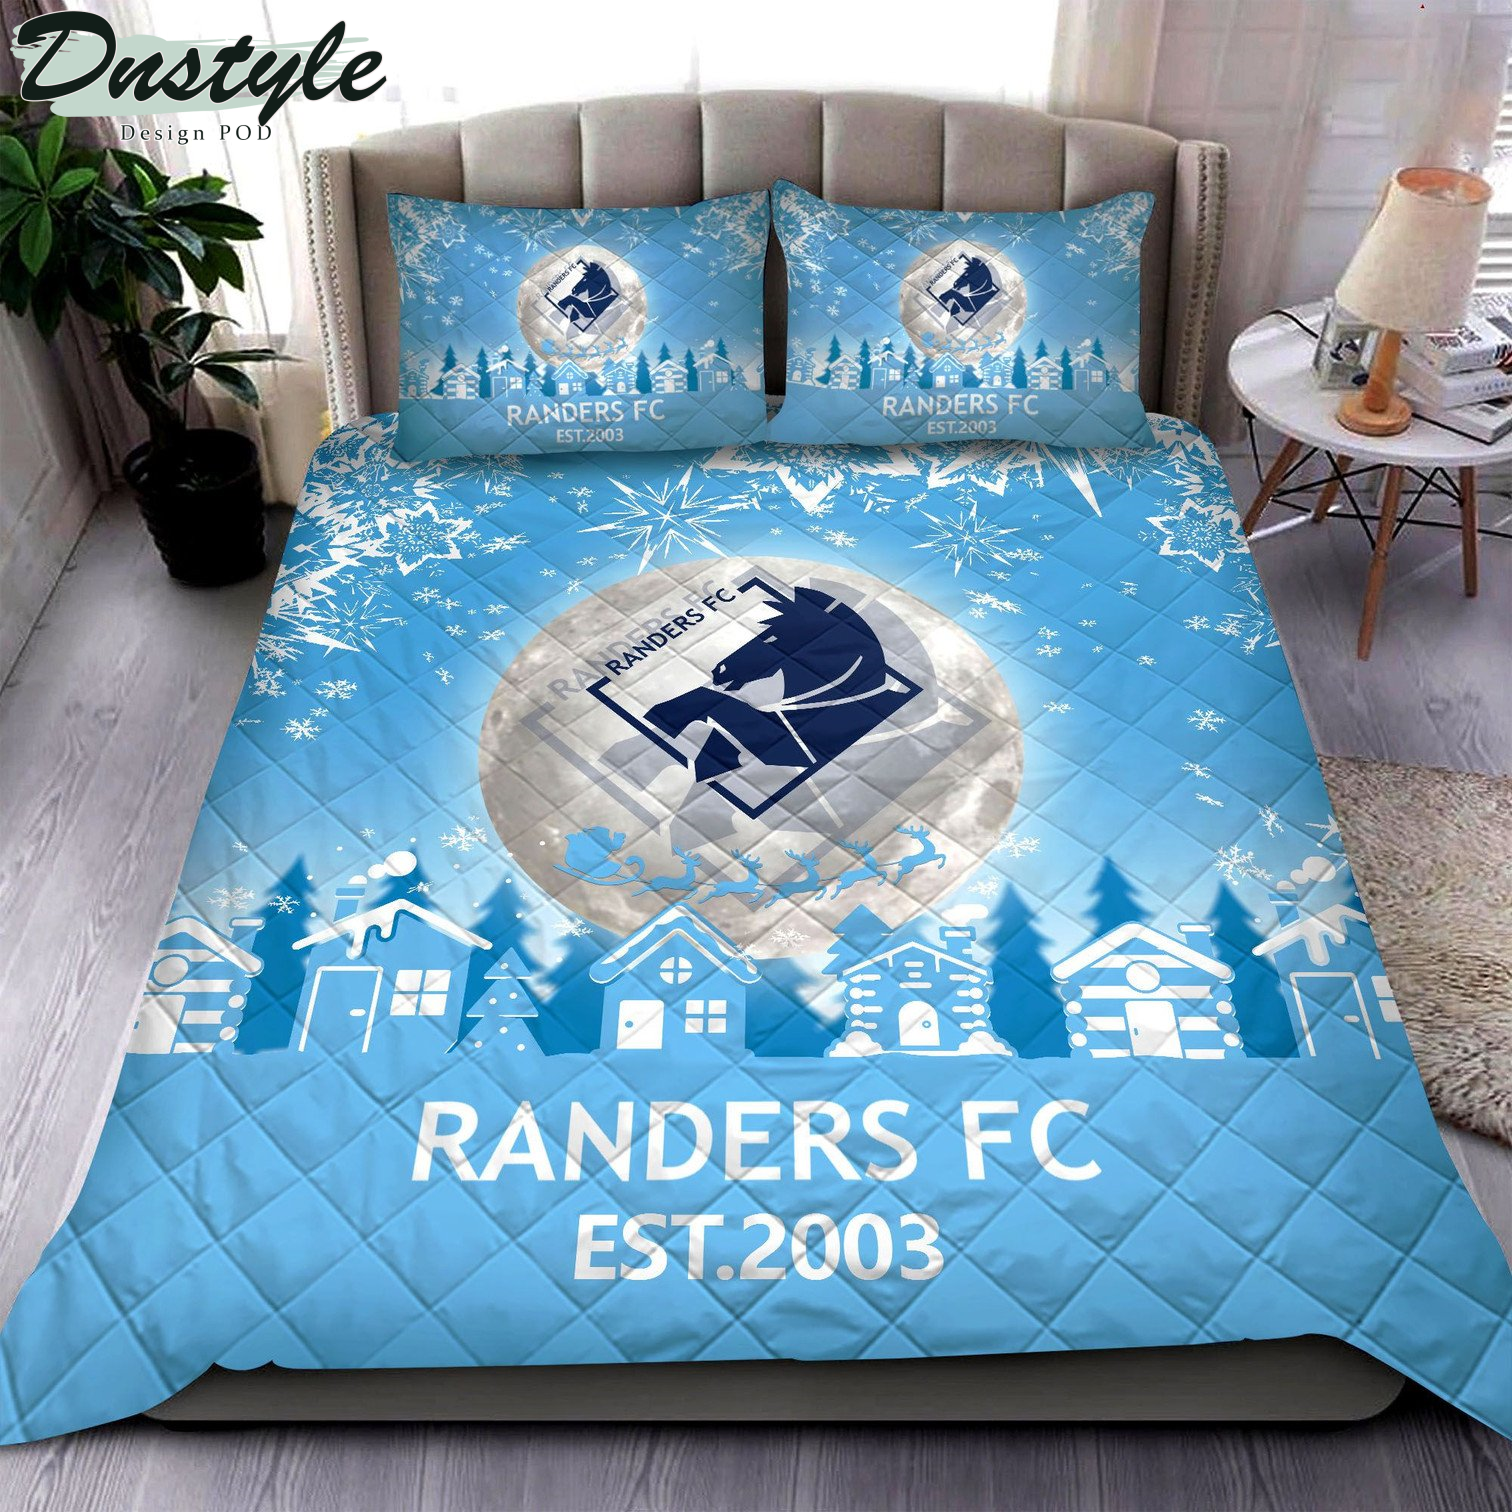 Randers FC bedding set